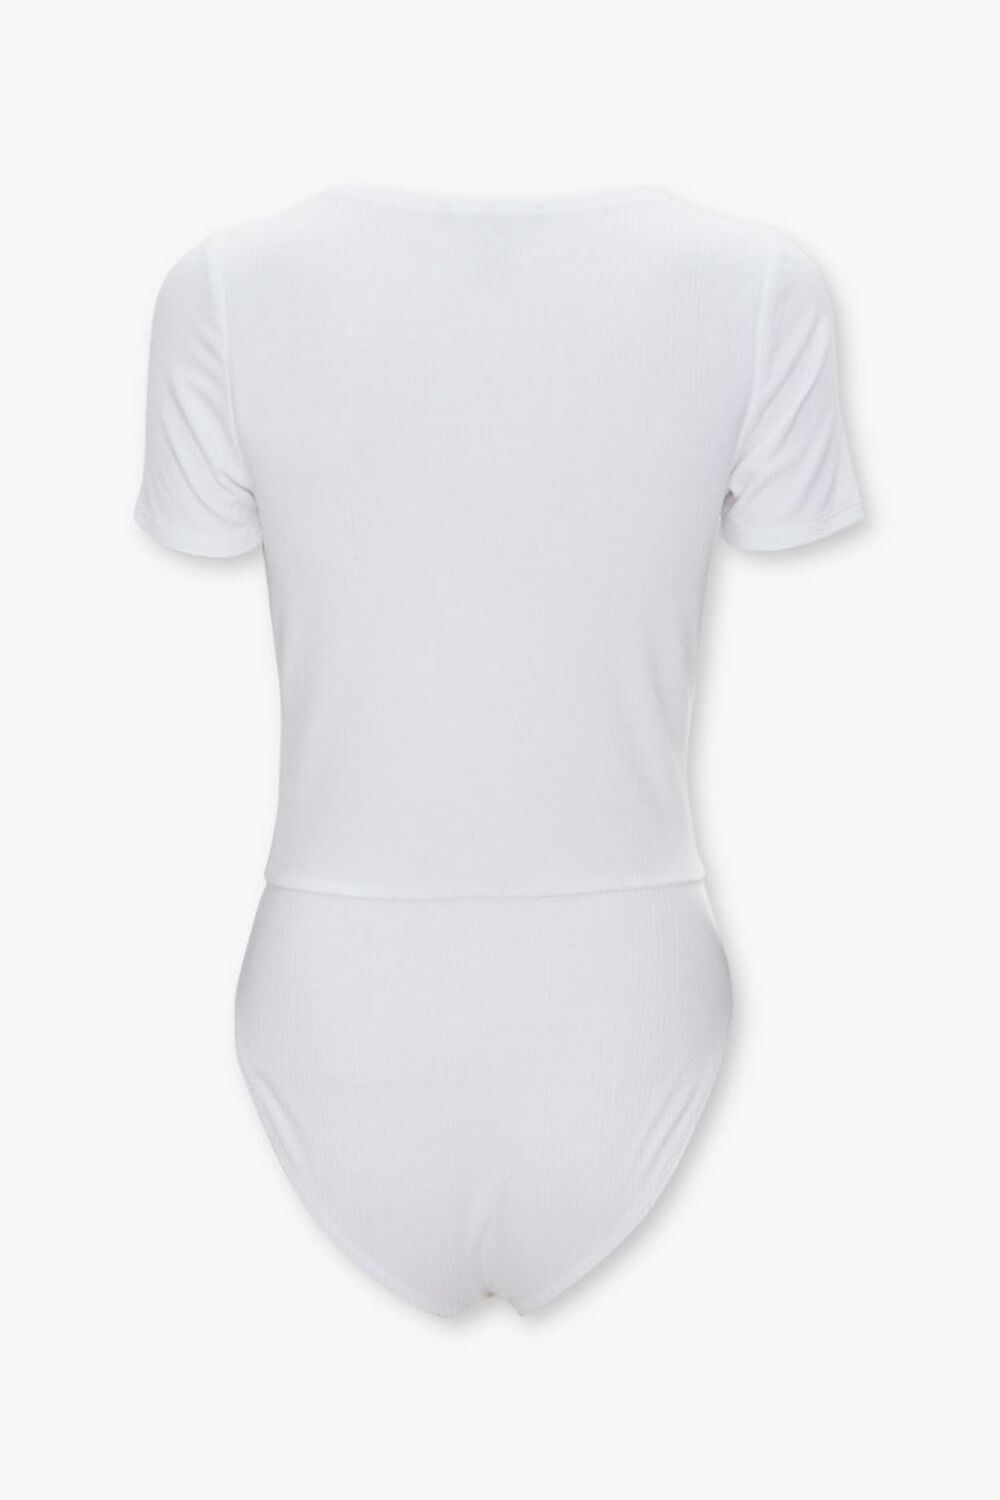 WHITE Ribbed Surplice Bodysuit, image 2